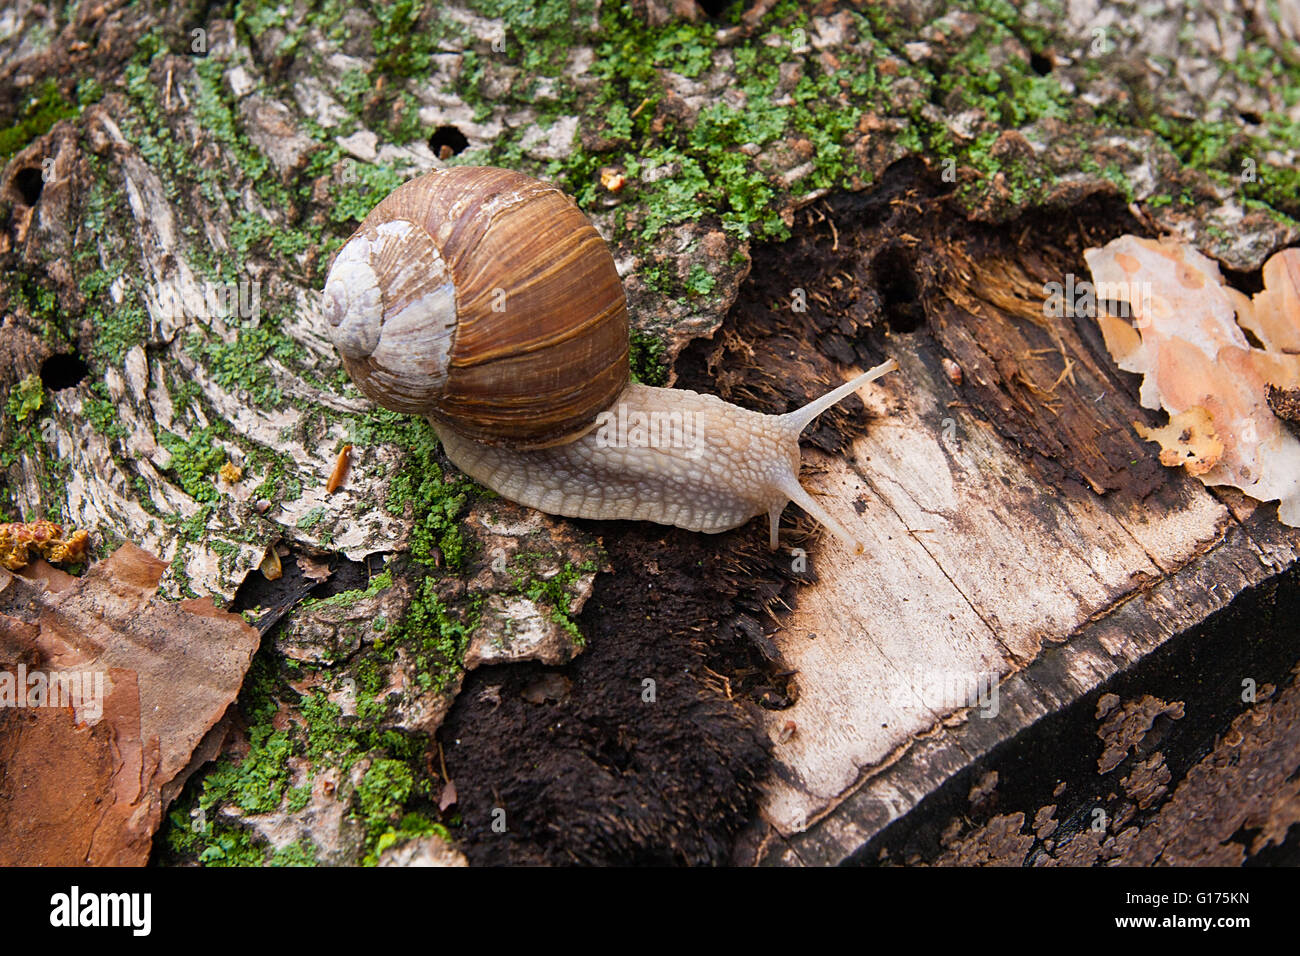 Burgundy snail (Helix pomatia, Roman snail, edible snail, escargot) crawling on its road. Close up view of brown tree bark Stock Photo